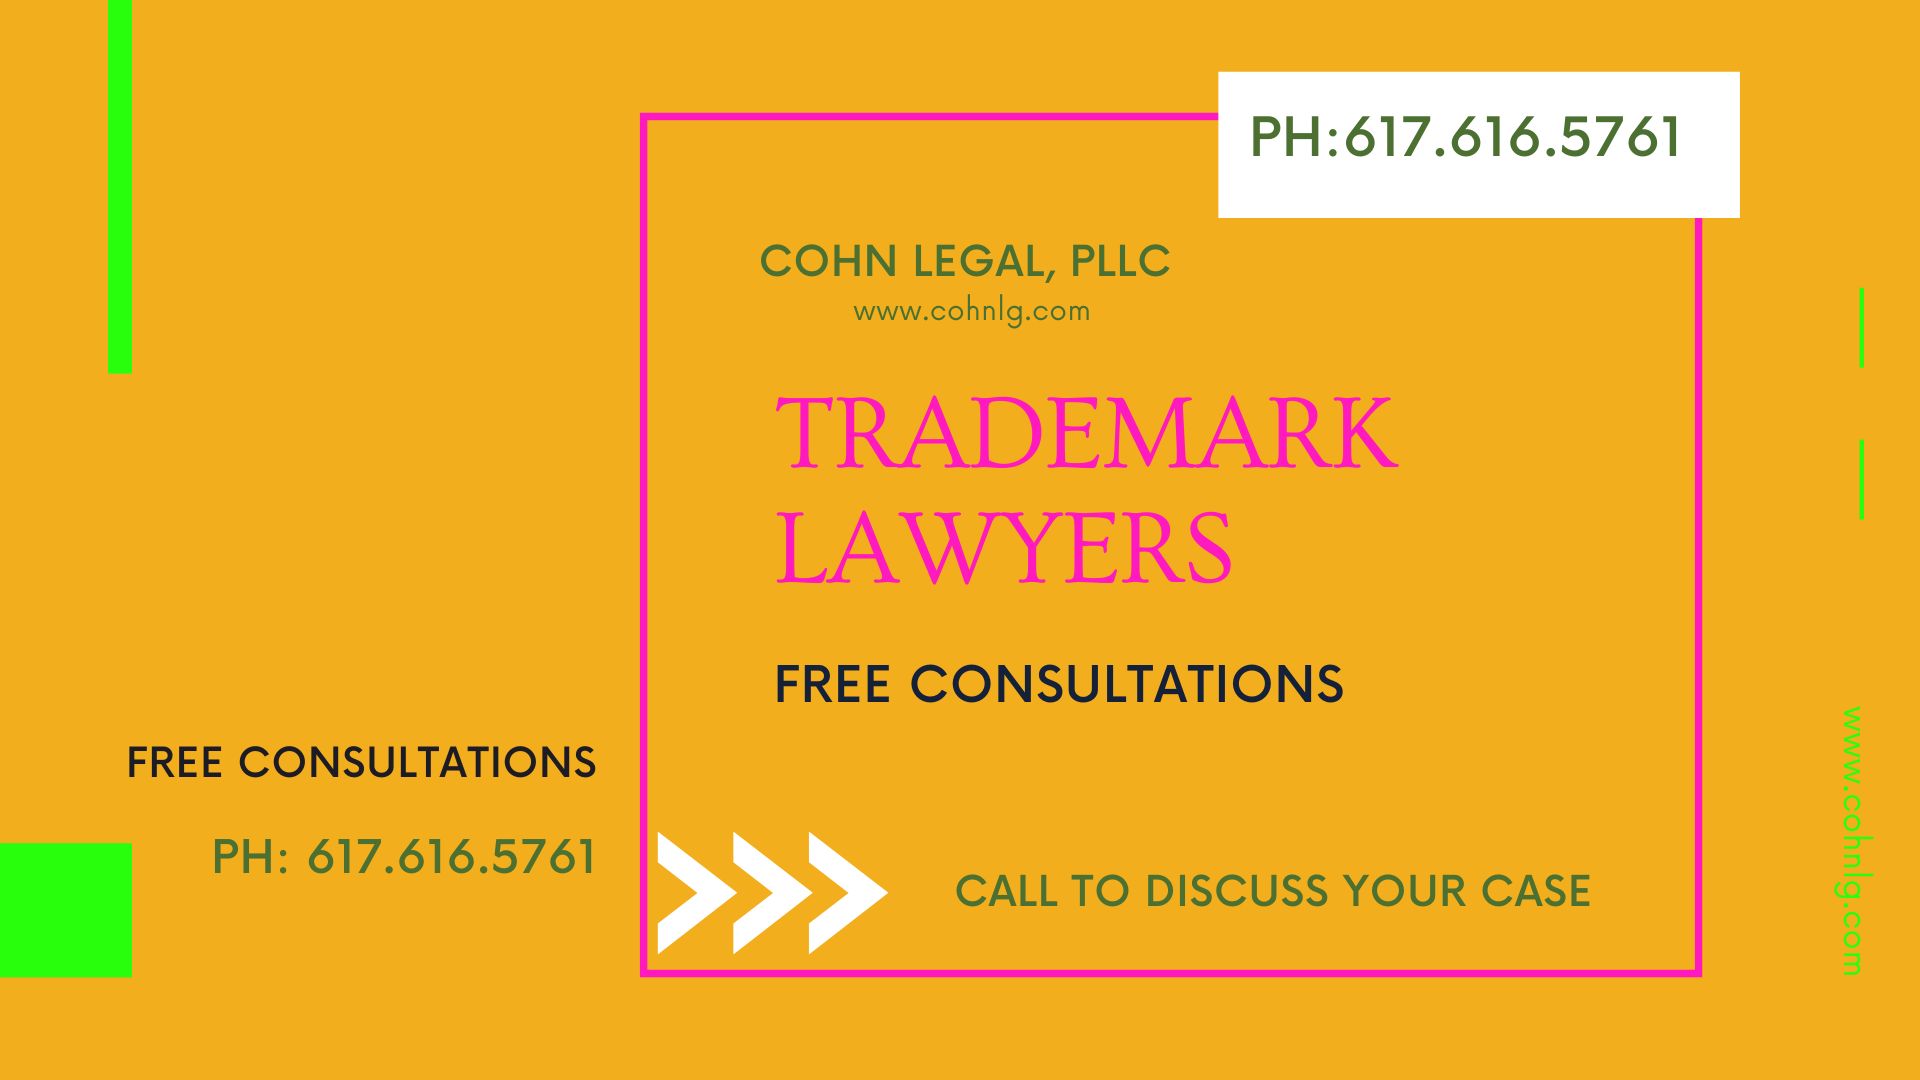 Cohn Legal, PLLC - Trademark Lawyers Boston - Somerville, MA, US, registration for trademark